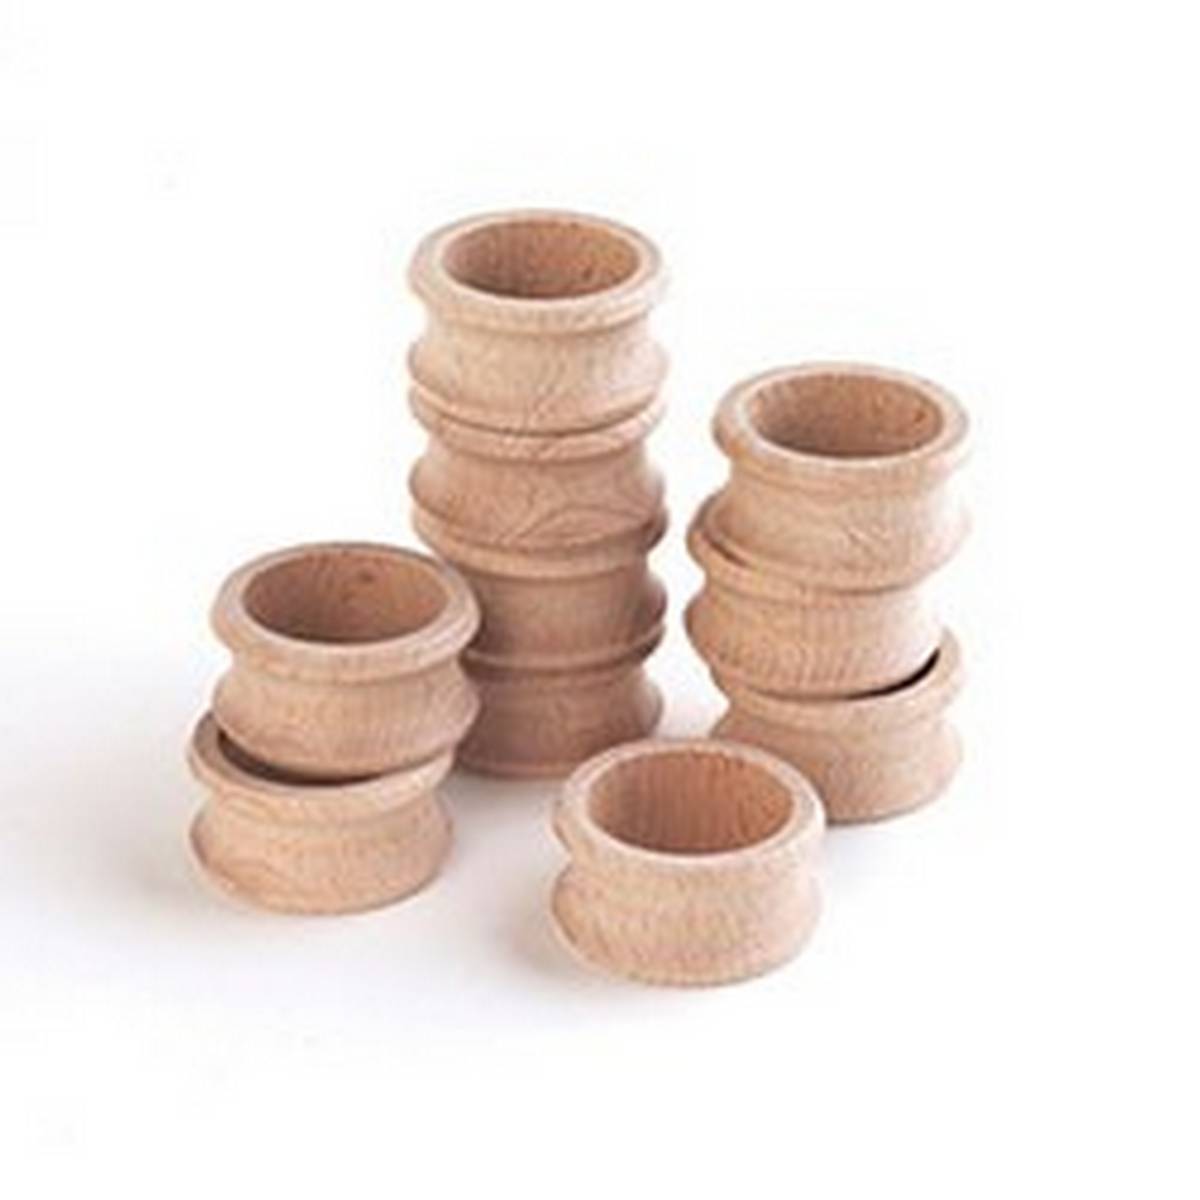 Wooden Napkin Rings - Pack of 10